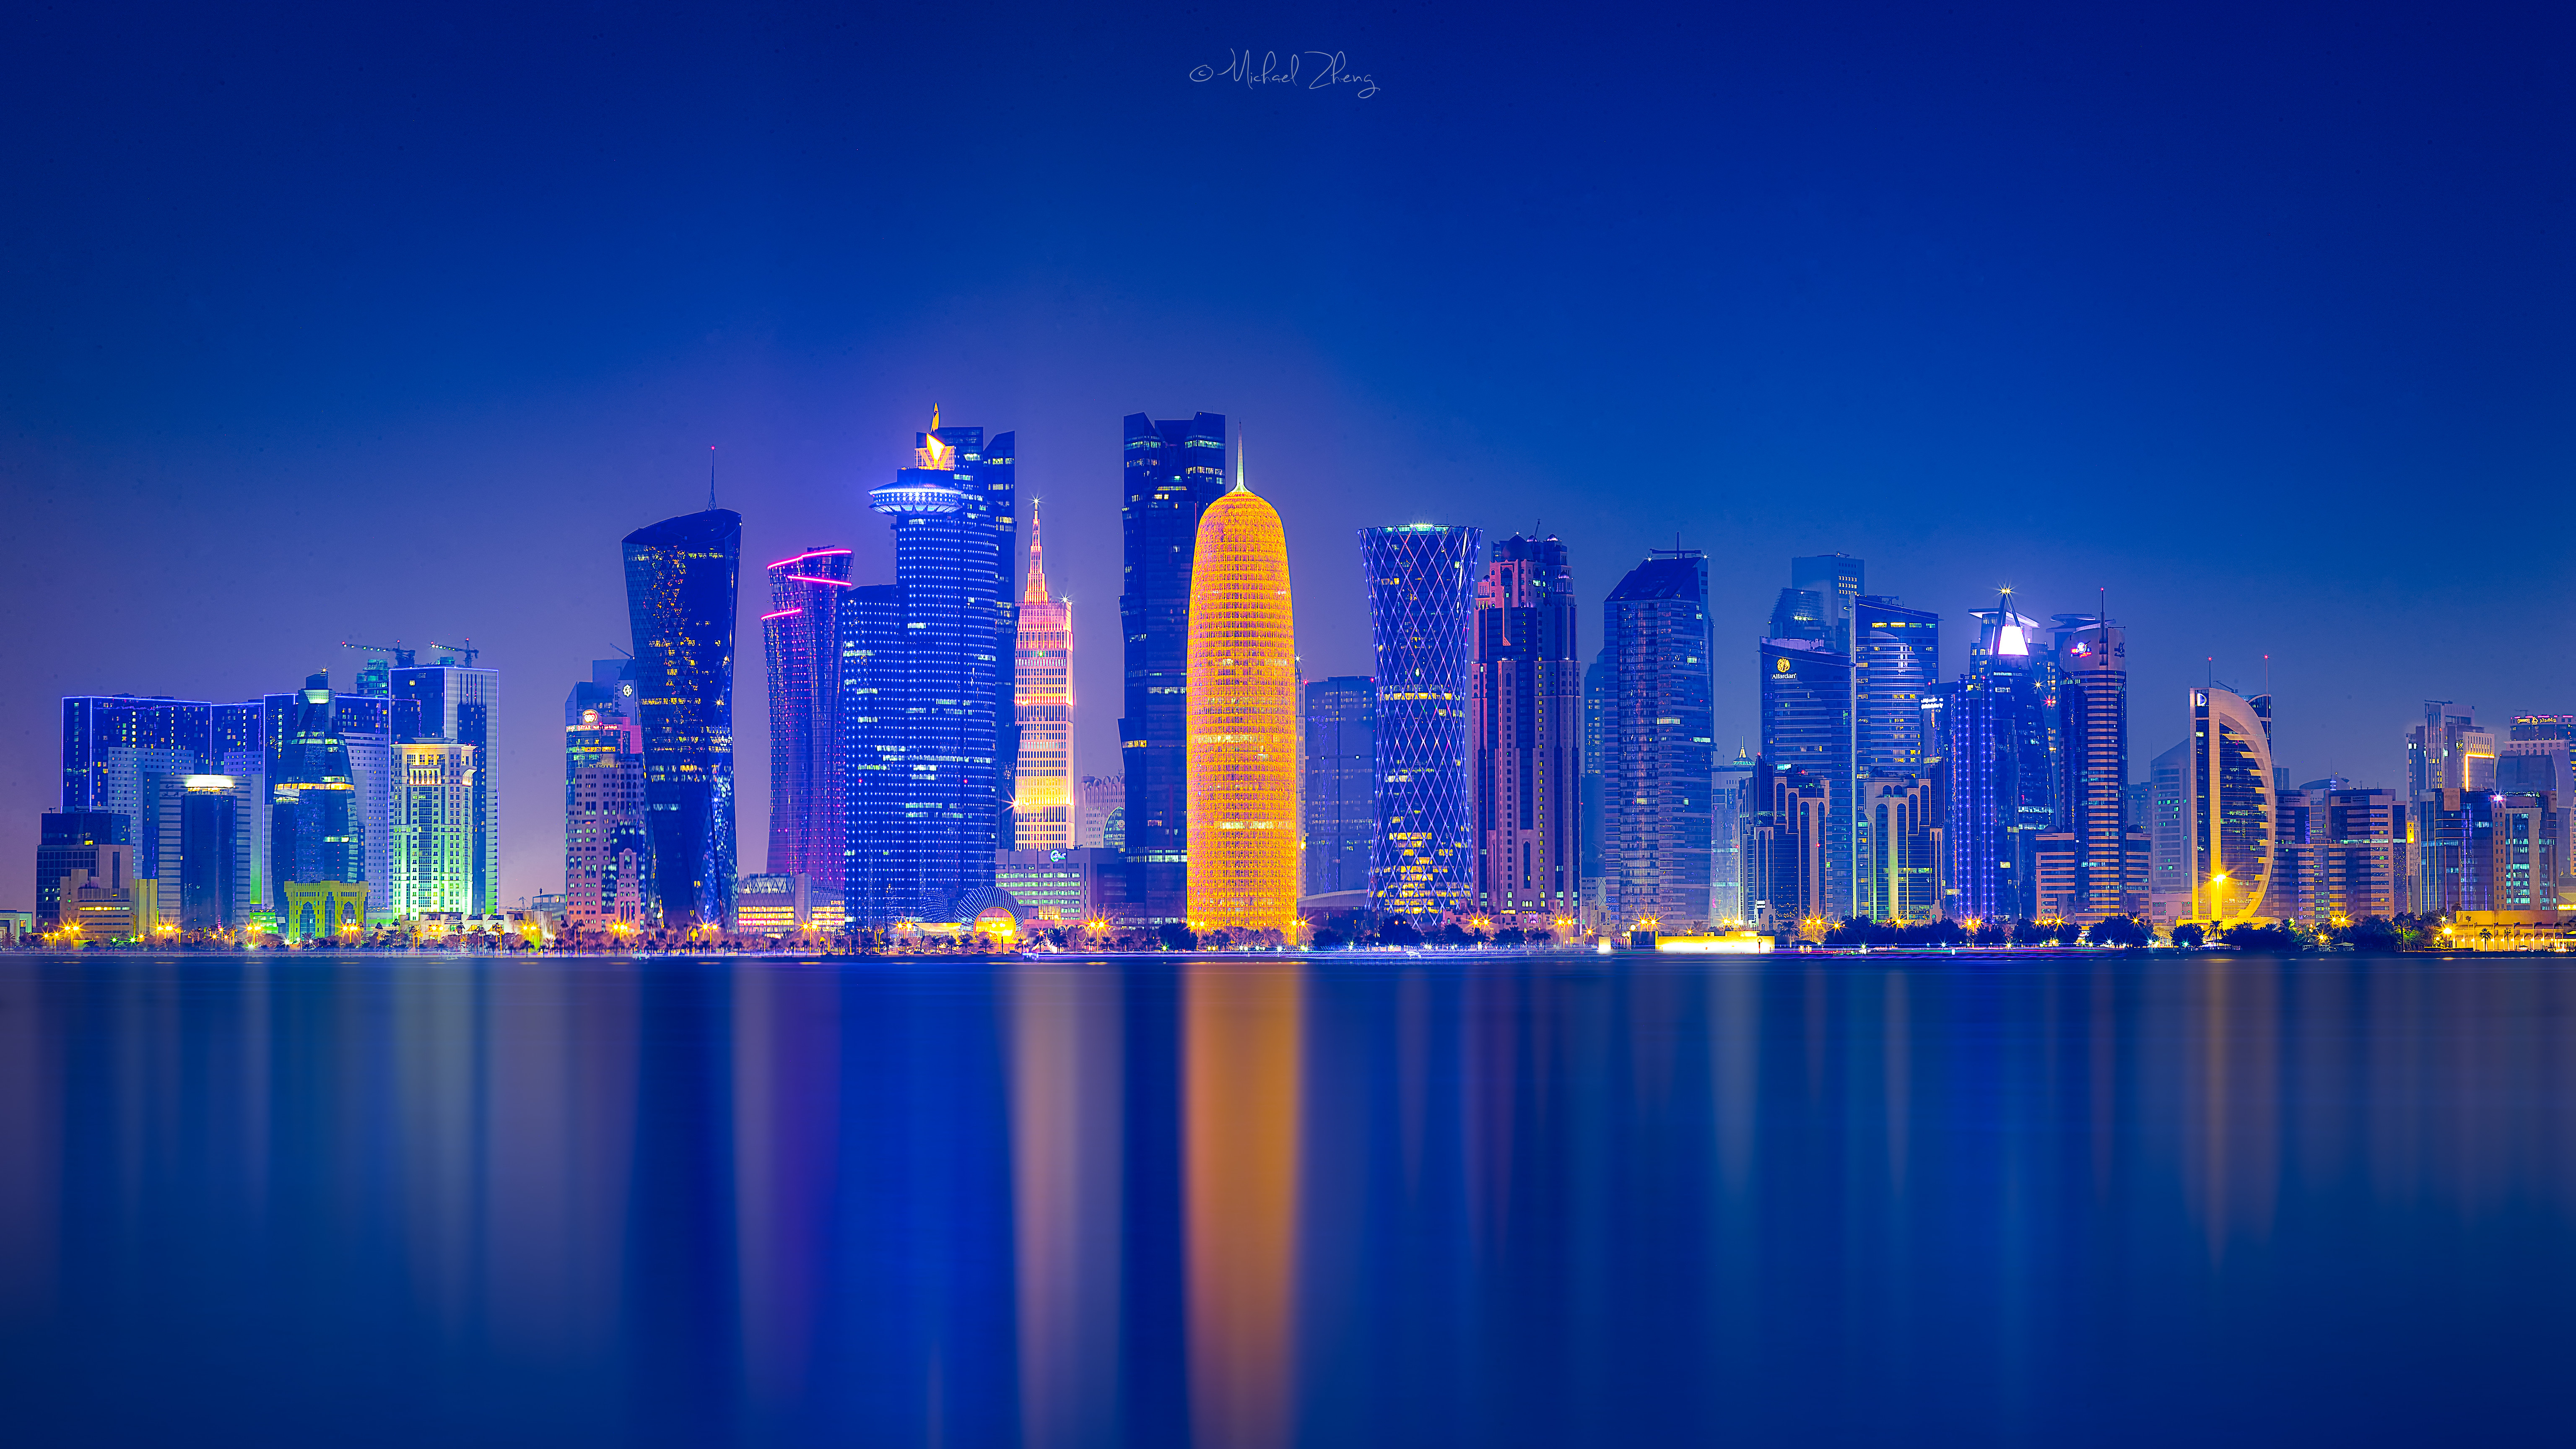 Urban Qatar Doha Landscape City Lights Reflection Night Photography 6144x3456